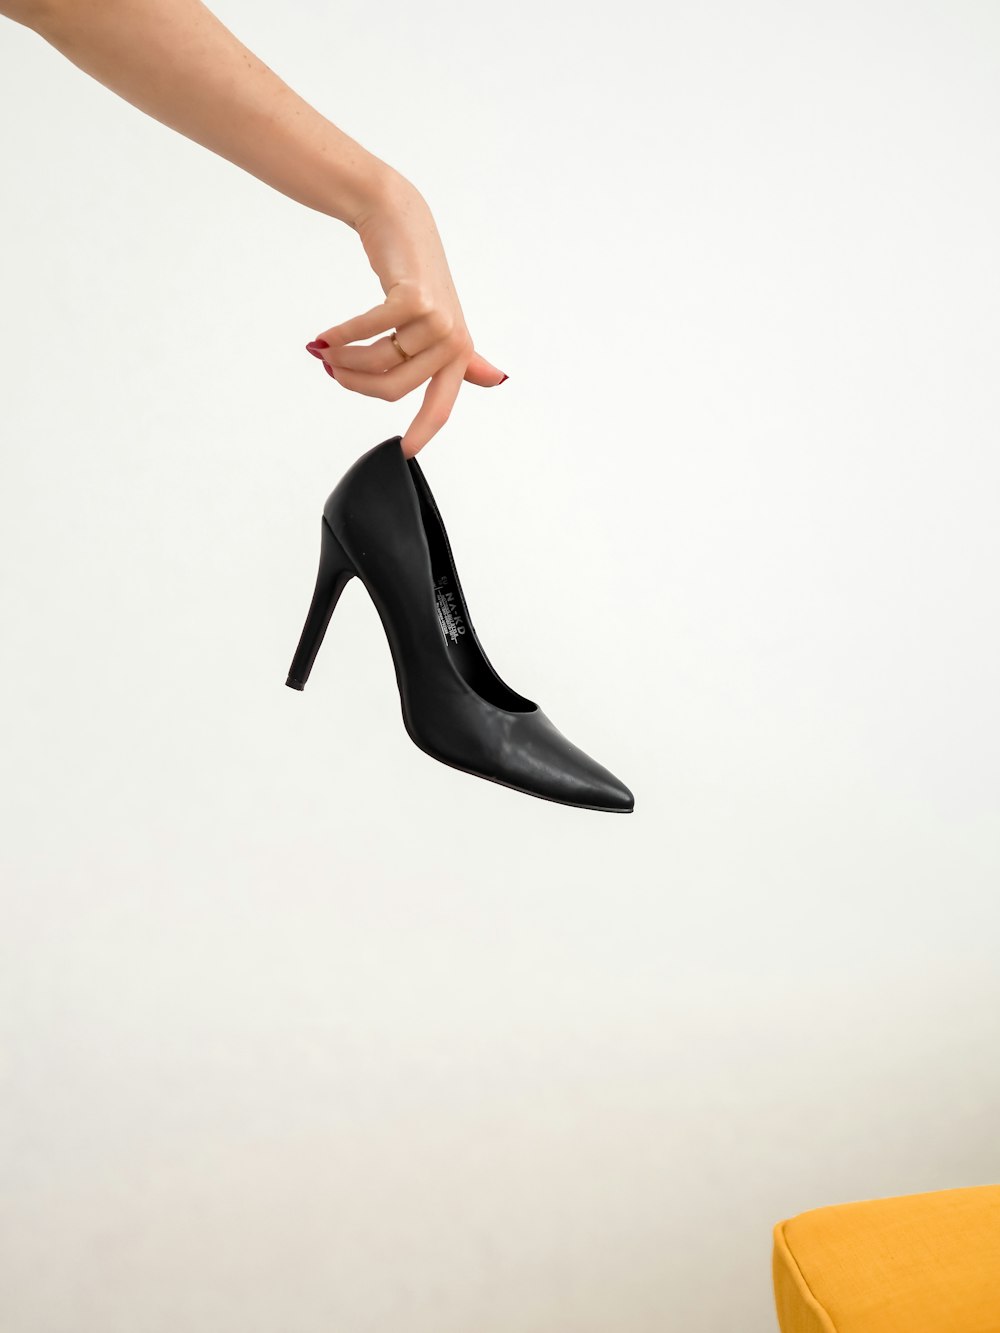 350+ Heels Pictures [HQ] | Download Free Images on Unsplash